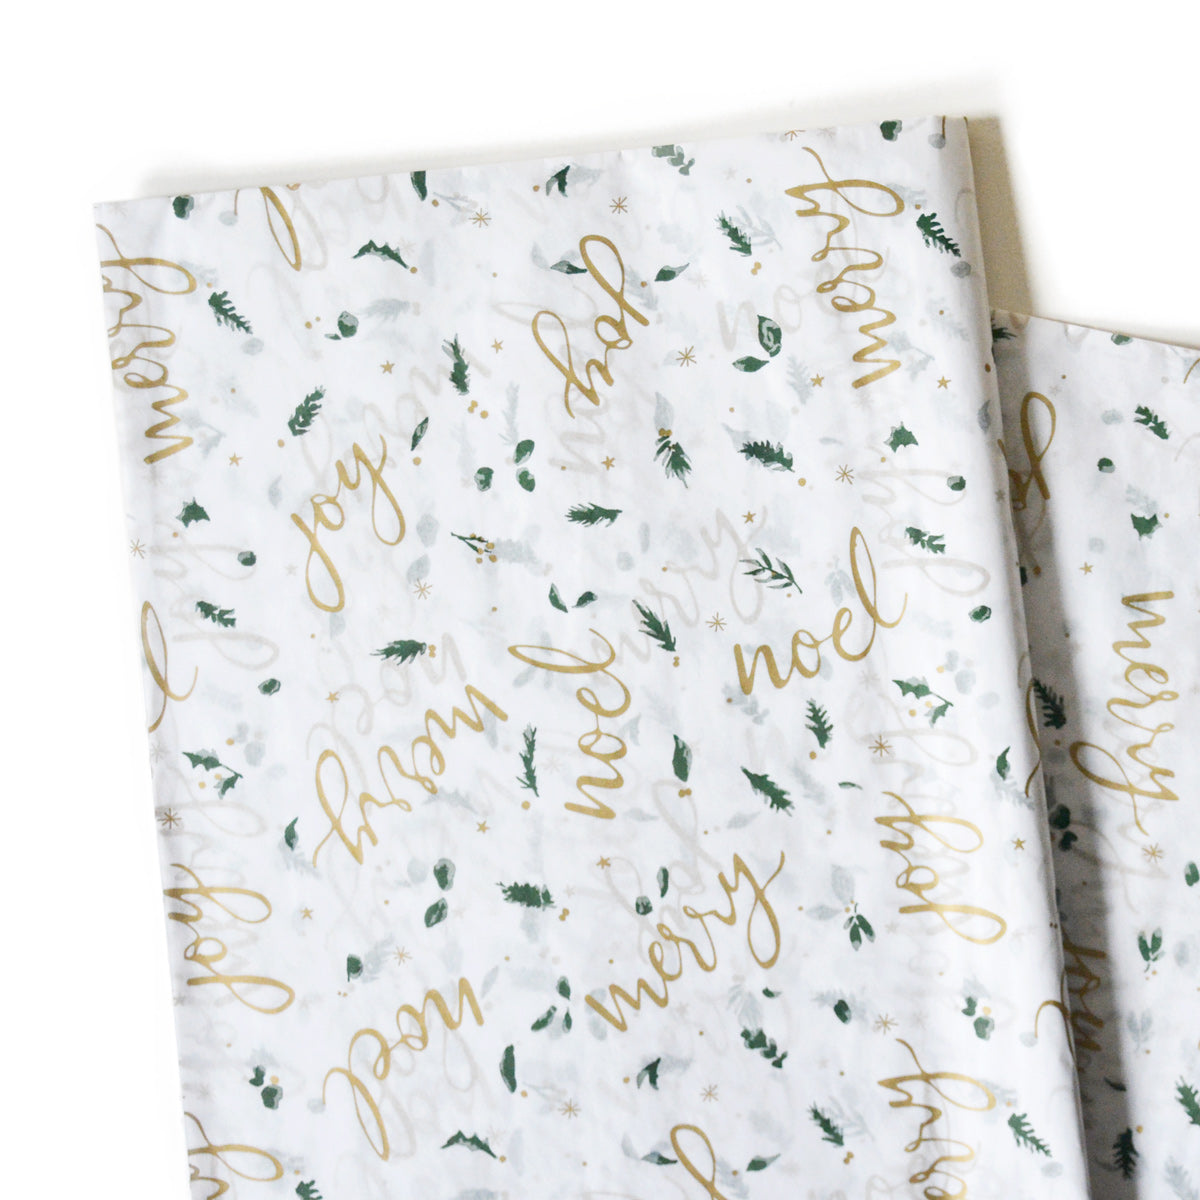 Eucalyptus Greeneries Patterned Tissue Paper - Boho Christmas